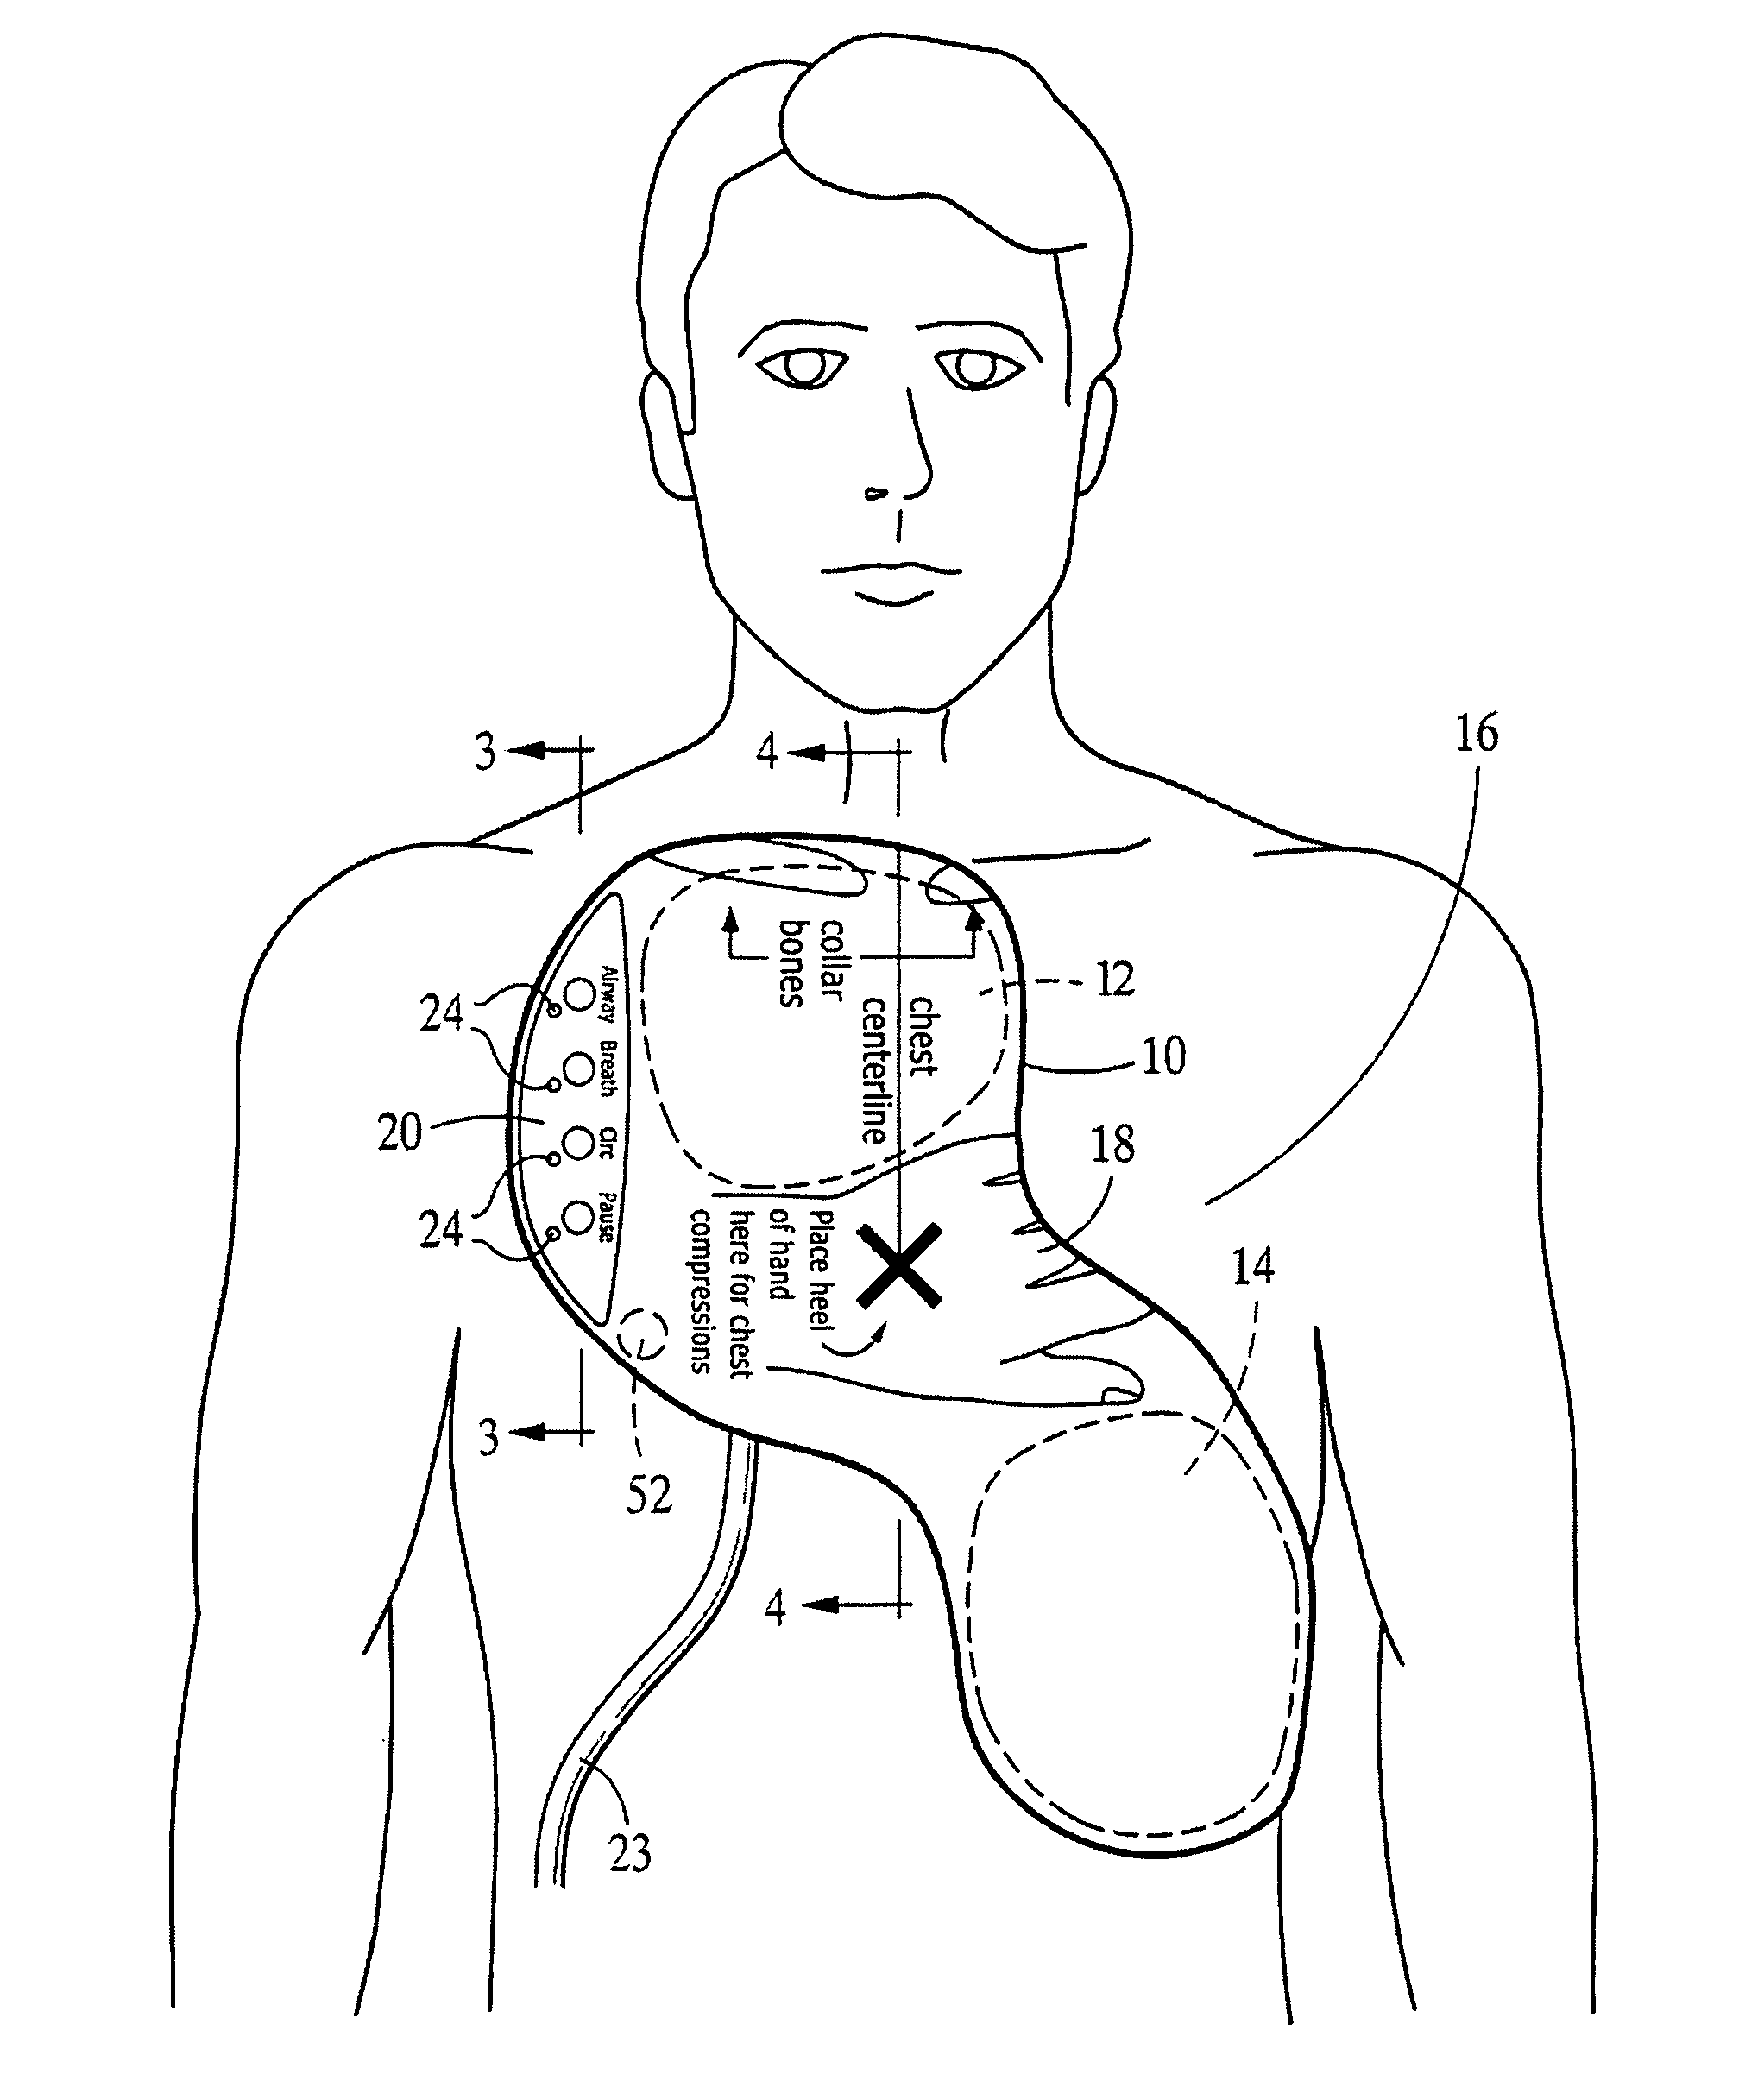 Integrated Resuscitation